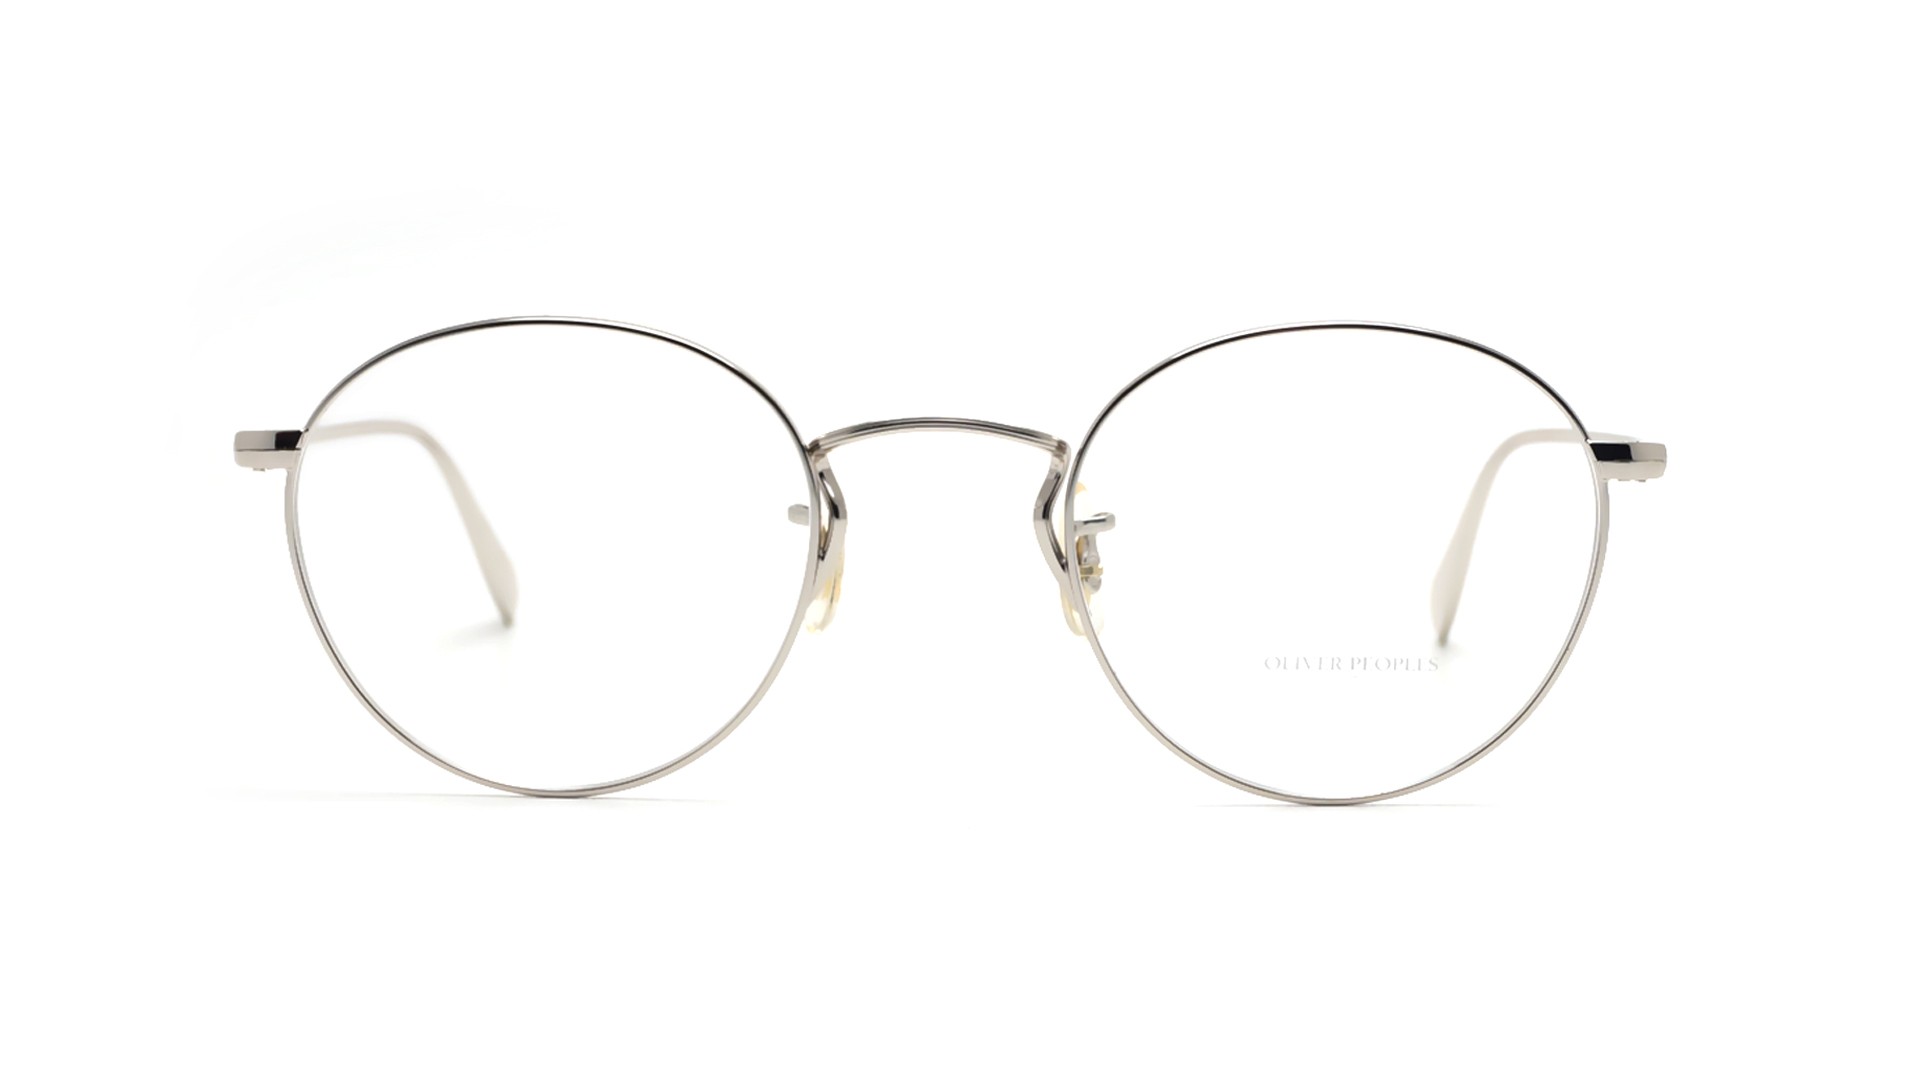 Eyeglasses Oliver Peoples Coleridge Silver OV1186 5036 47-22 Small in